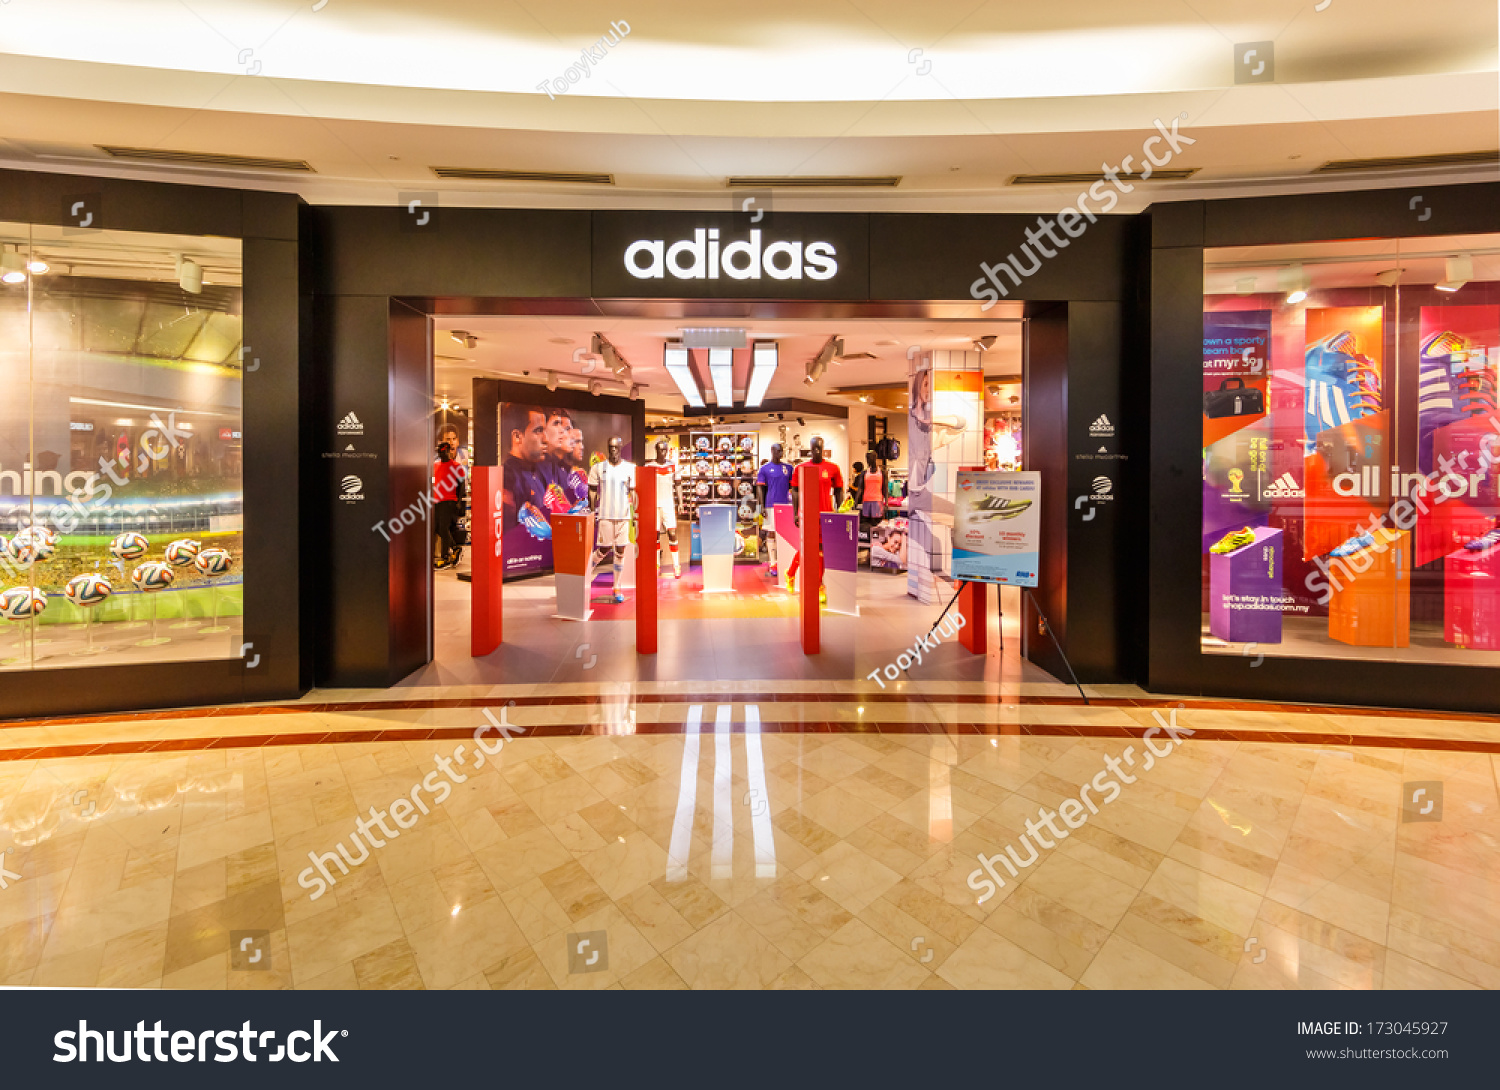 klcc adidas store